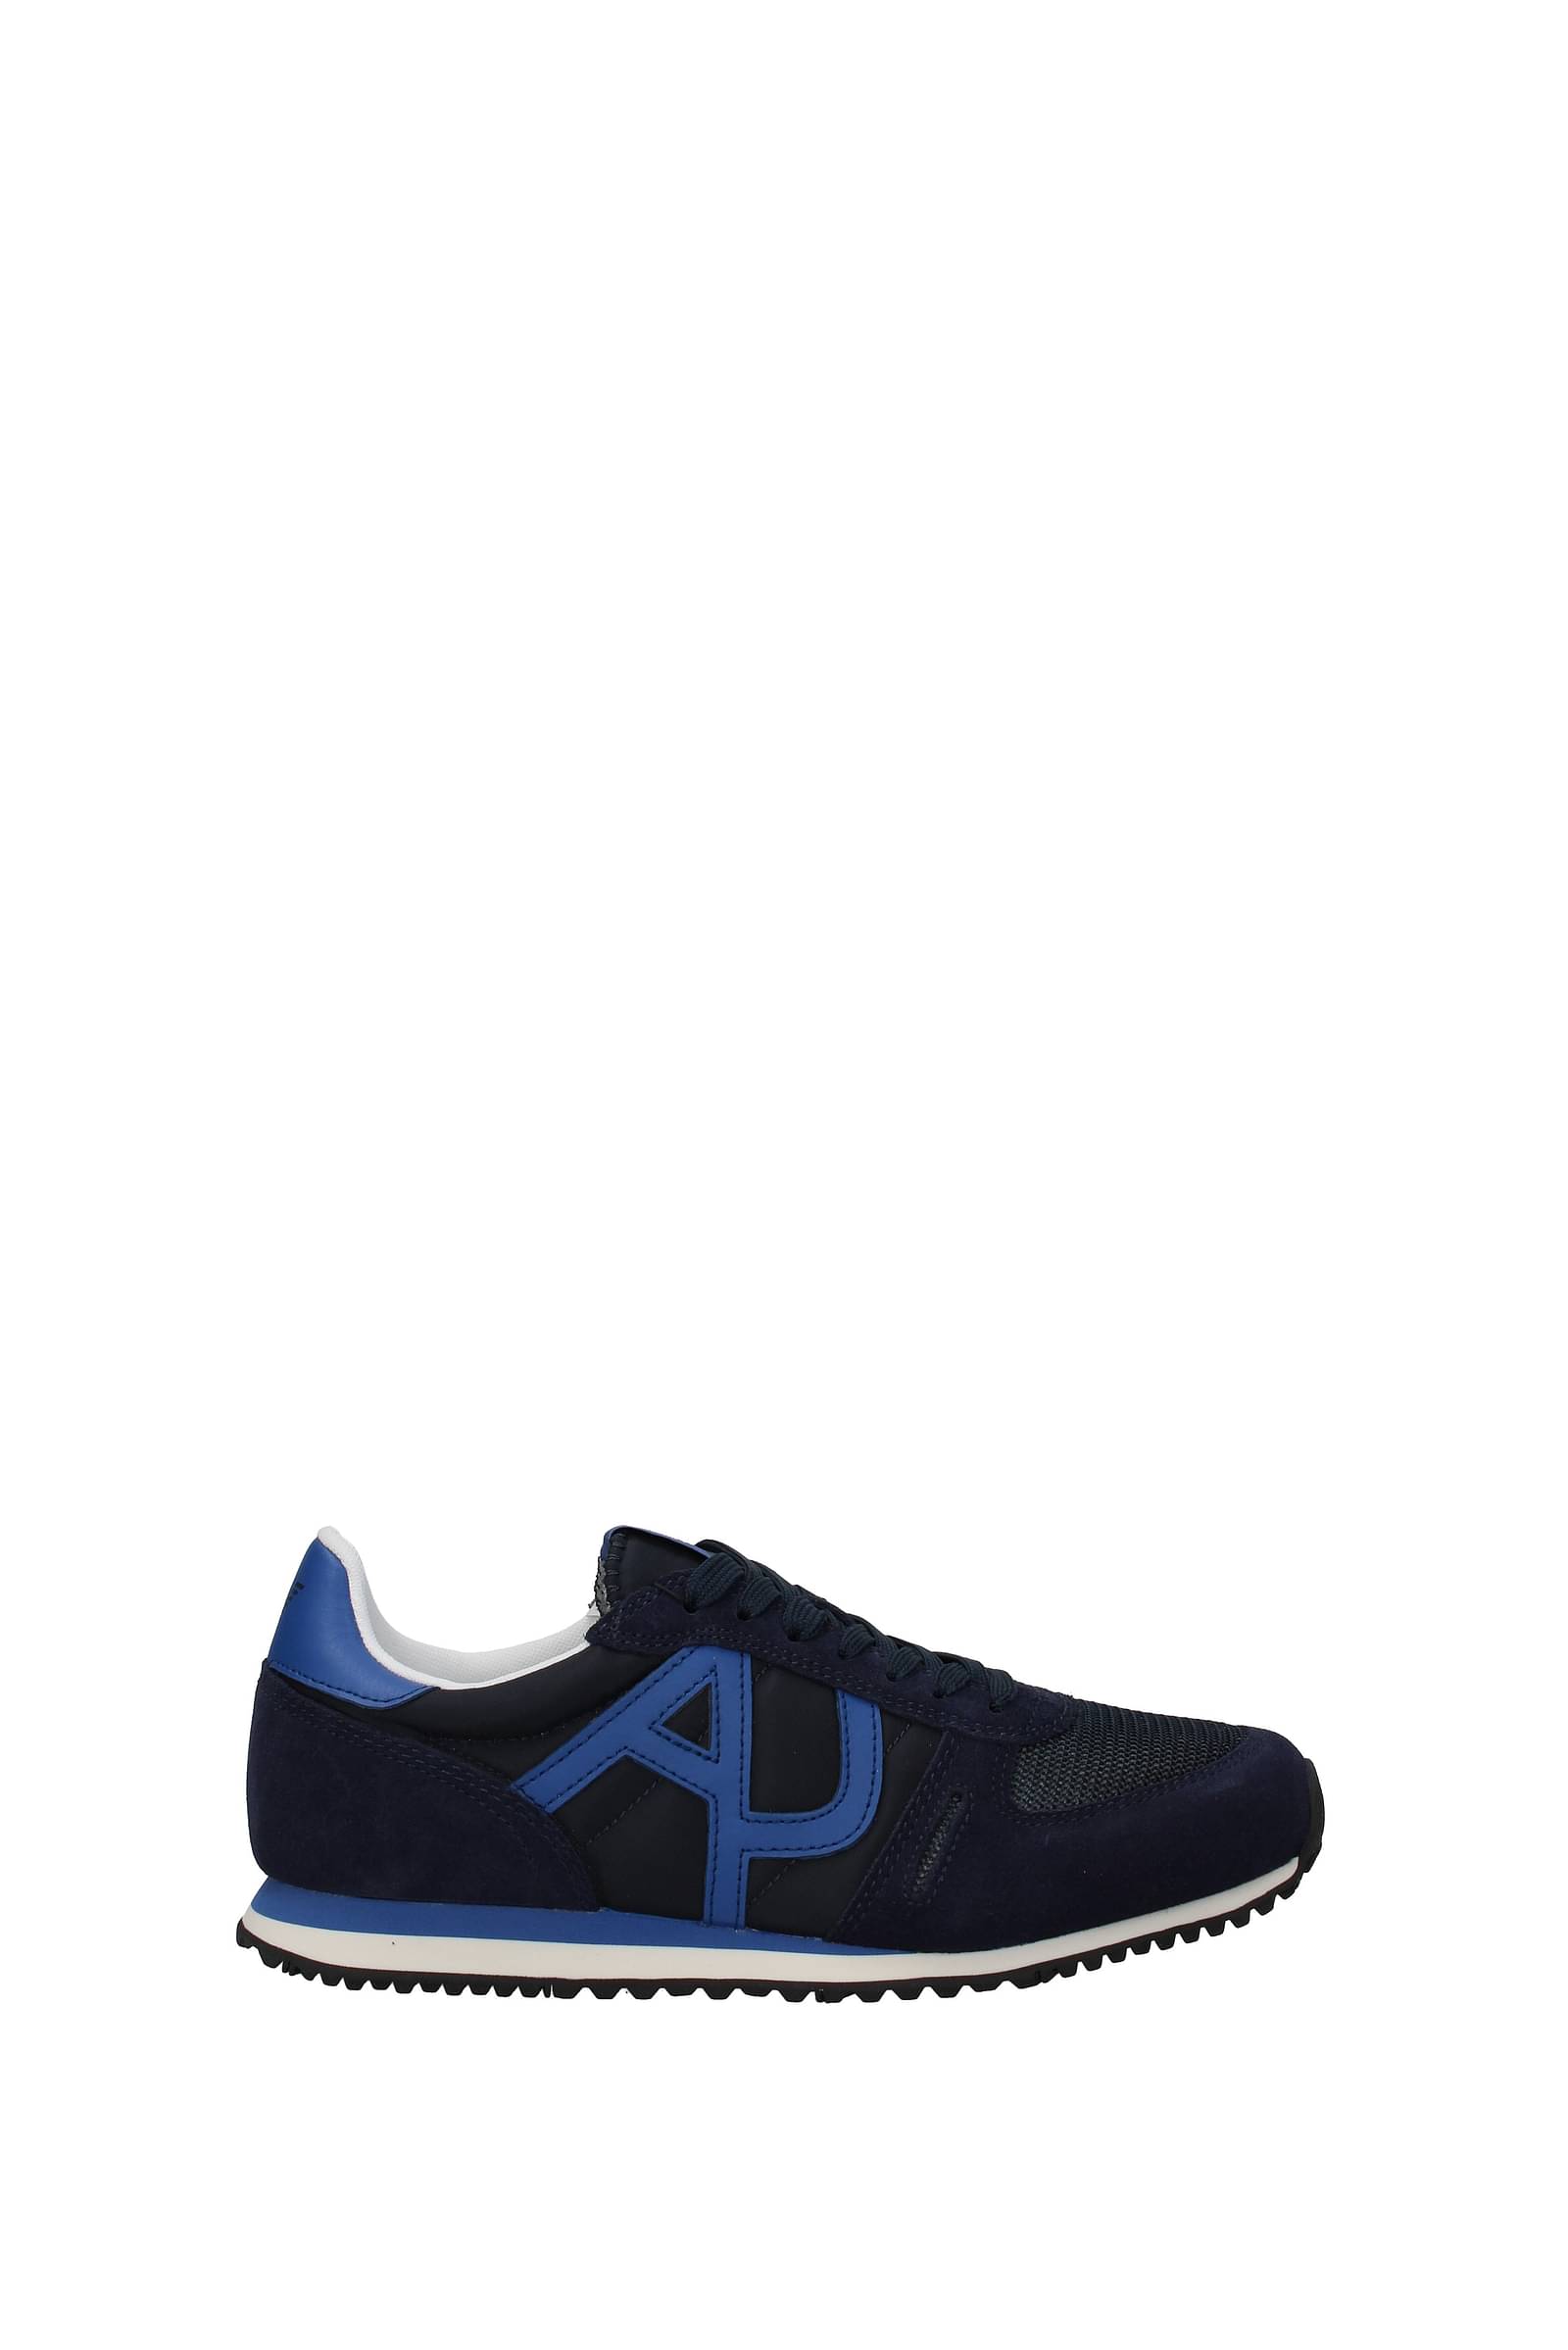 Armani Jeans Logo High Top Sneakers, $284 | Asos | Lookastic